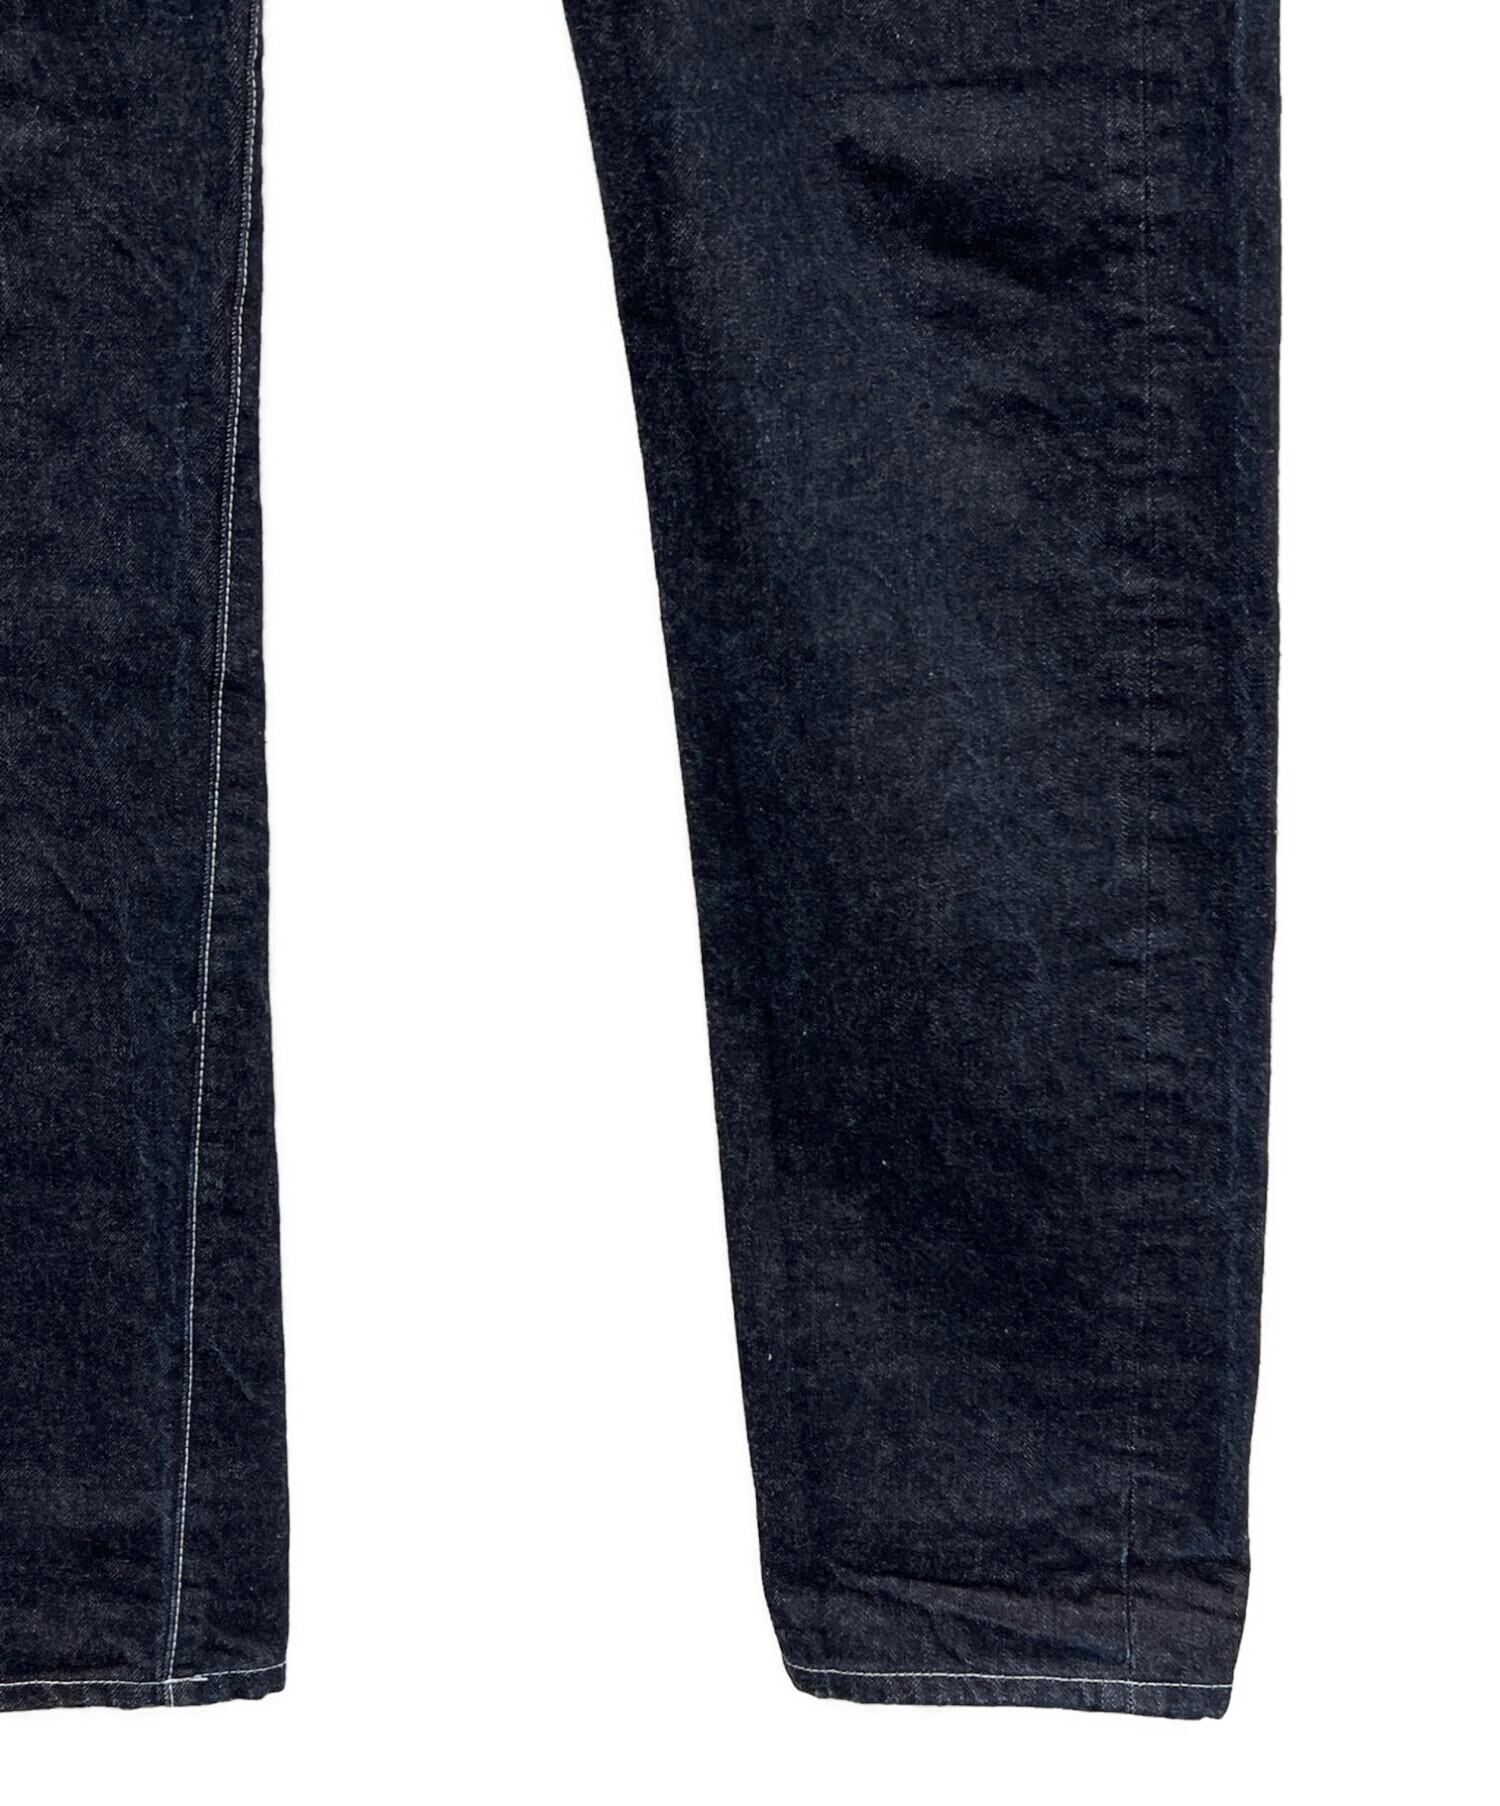 TENDER Co. (テンダー コー) TYPE130 Tapered Jeans ブルー サイズ:3